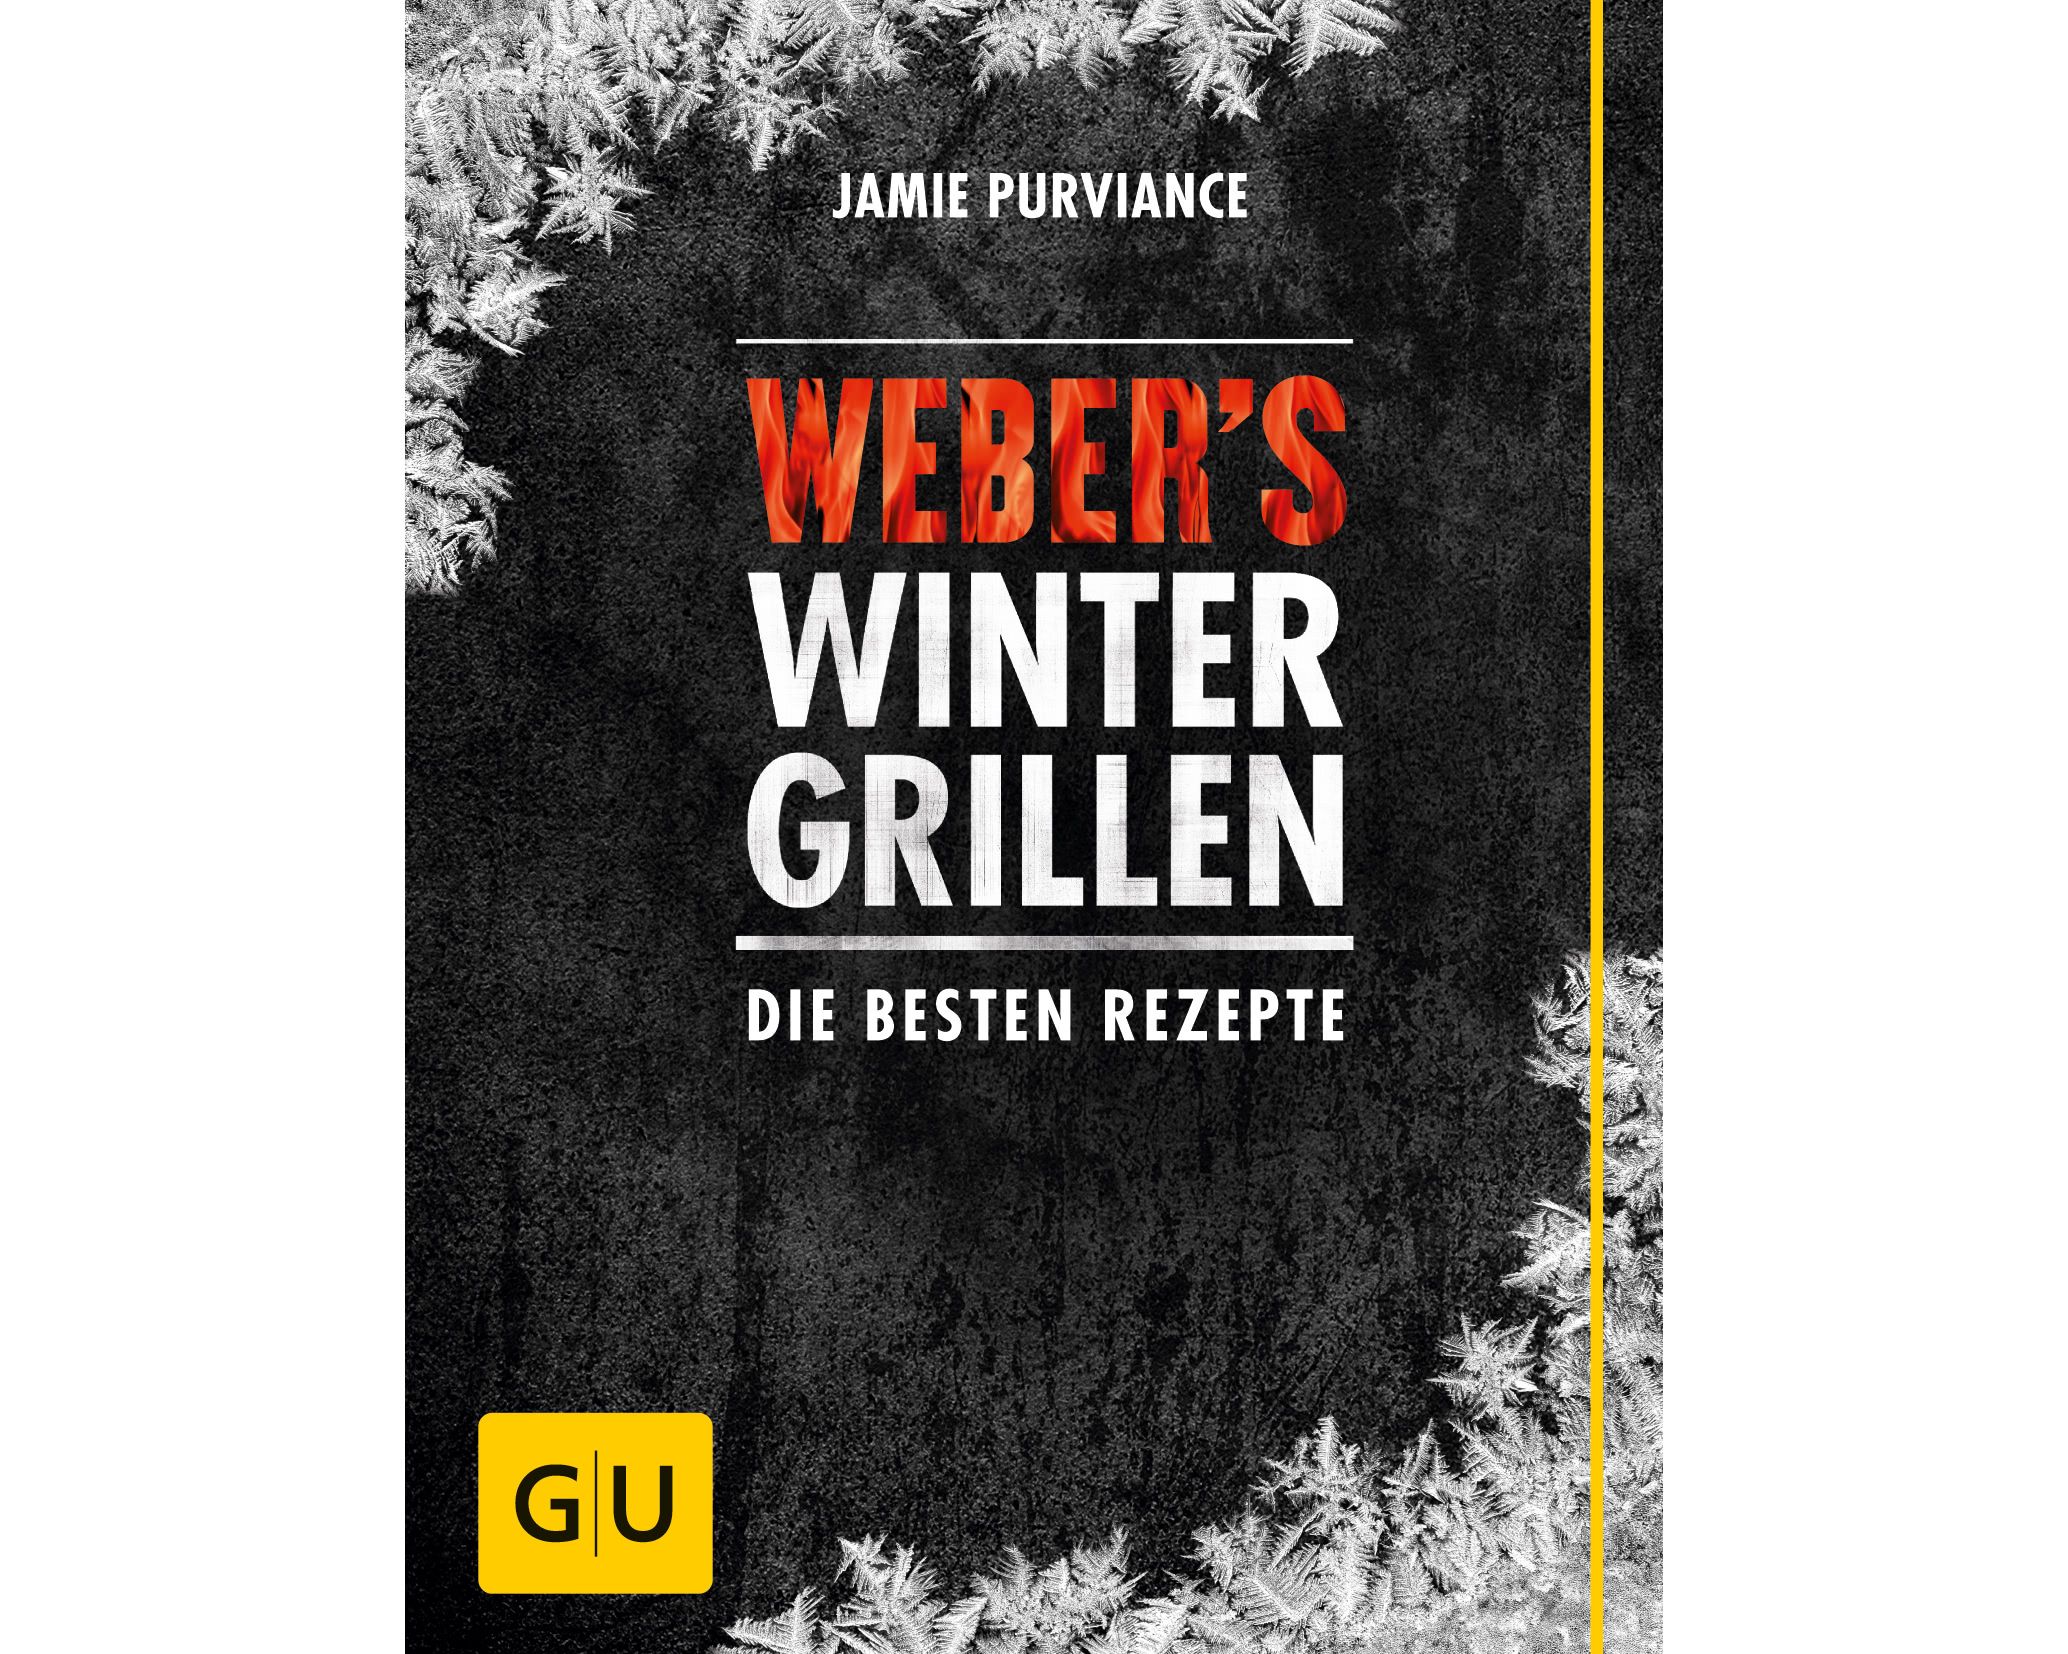 Webers® Wintergrillen, Buch